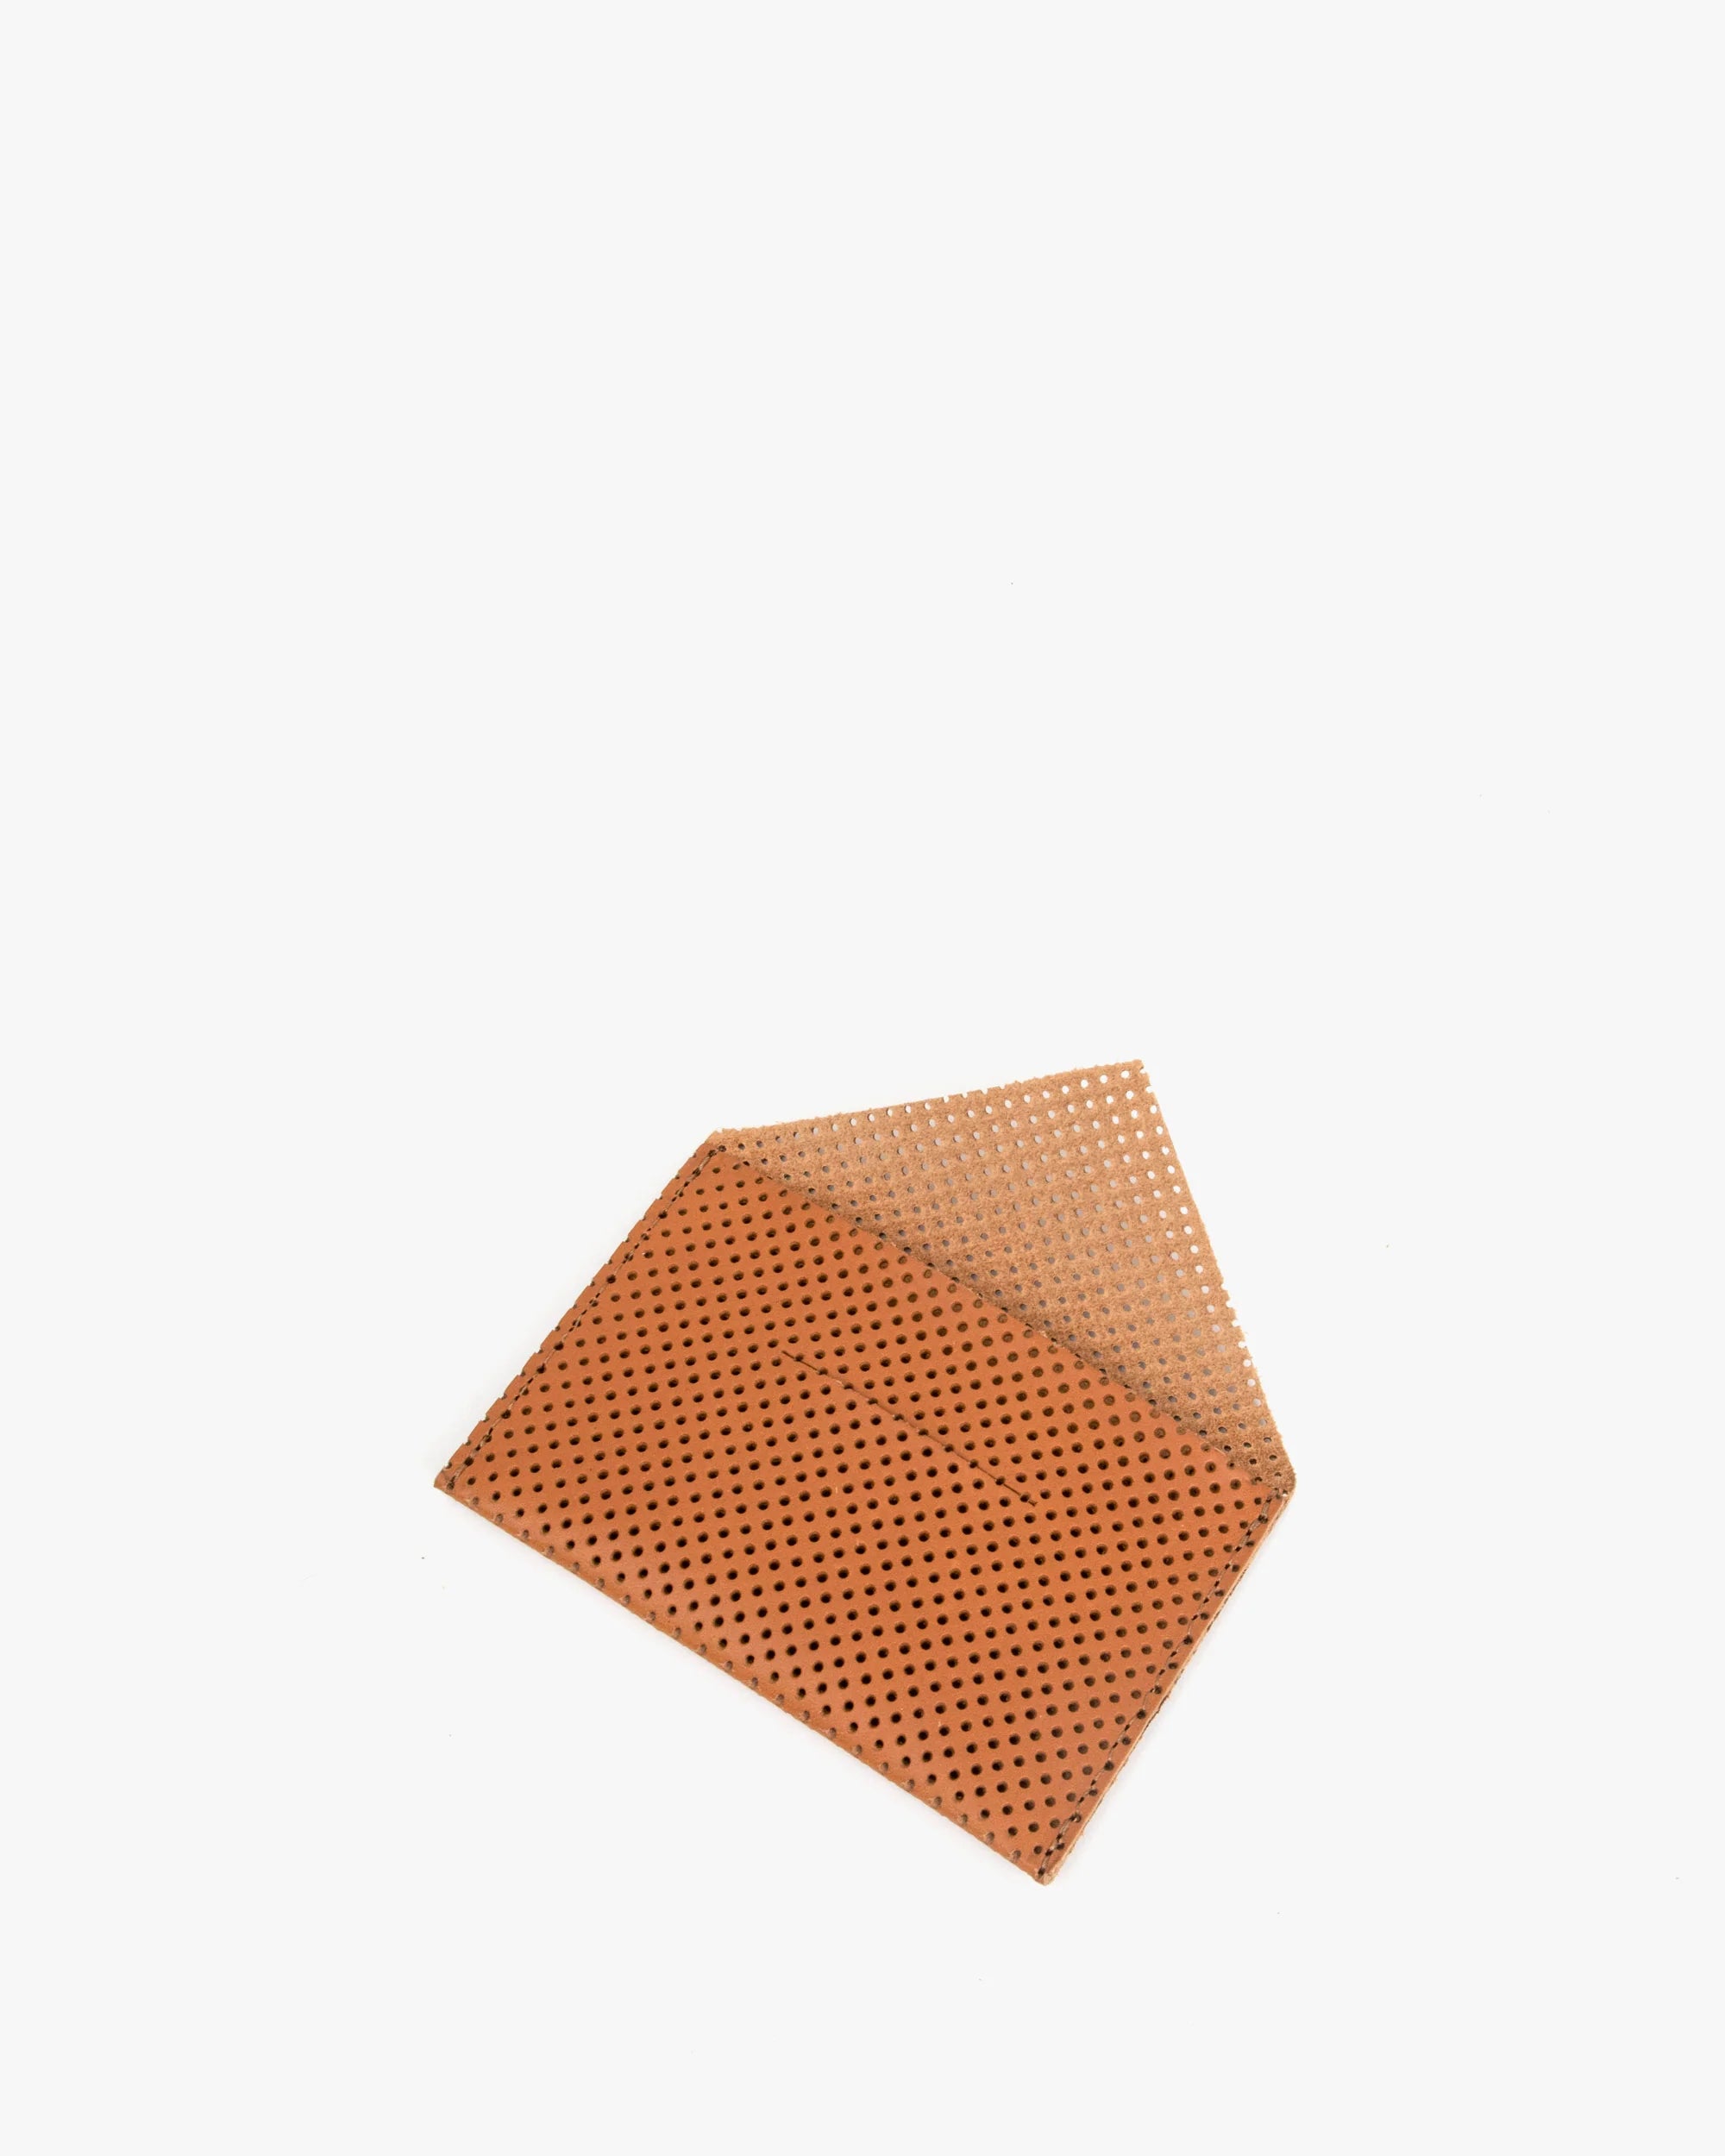 Card Envelope - Curio Perforated